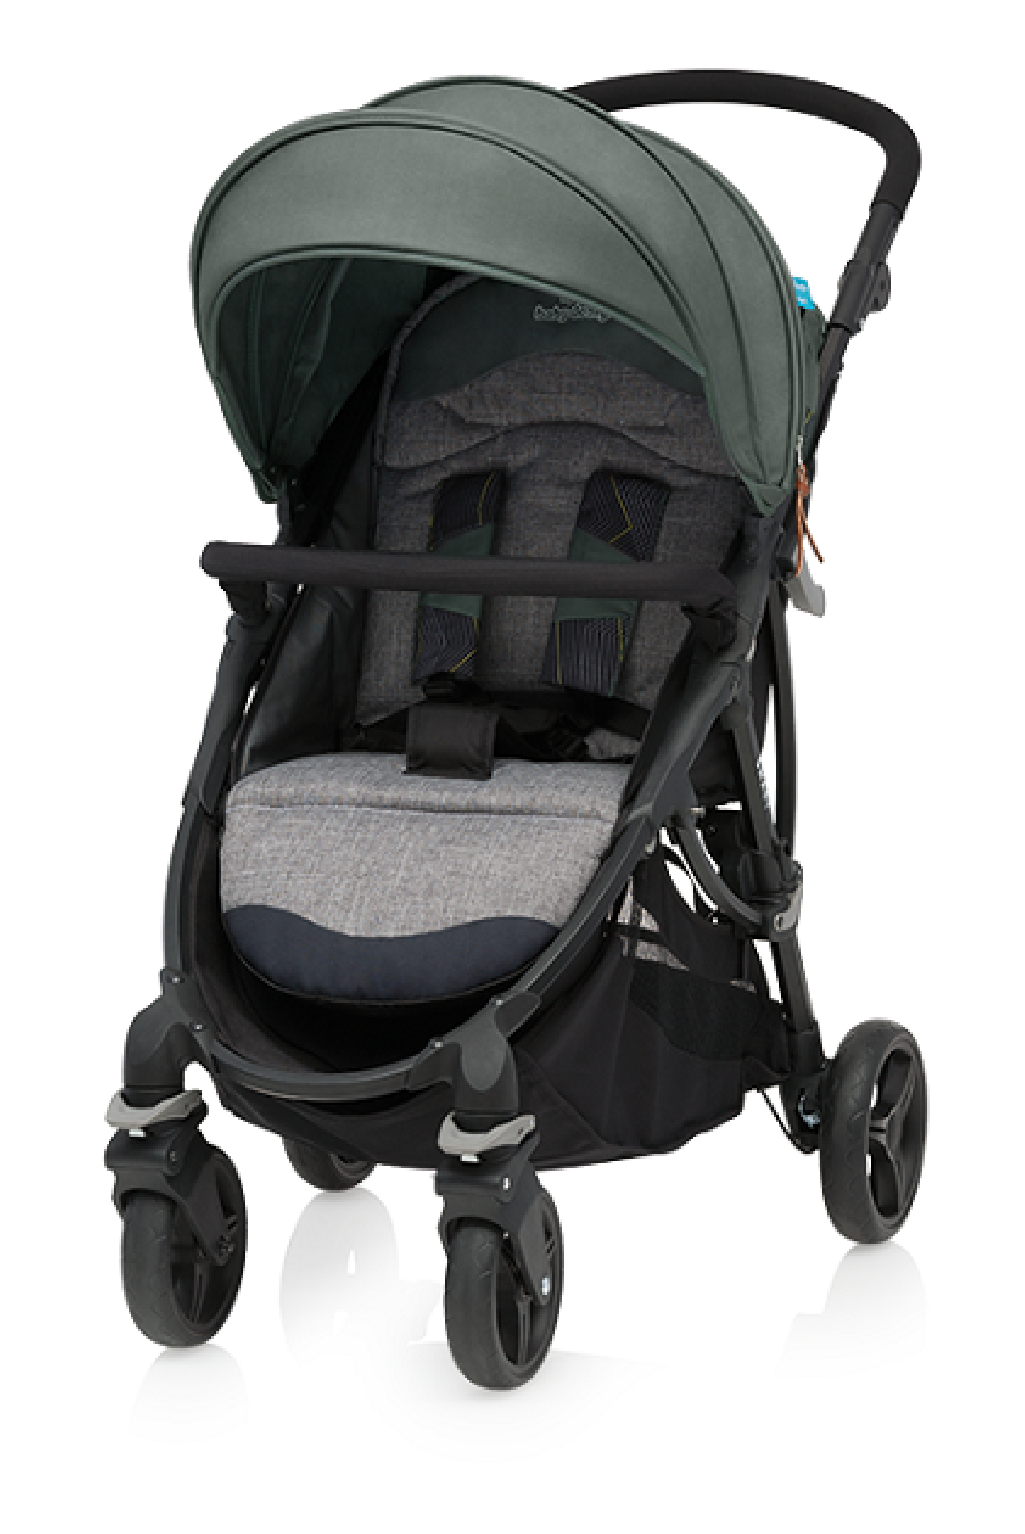 Baby Design Smart wózek spacerówka 04 olive